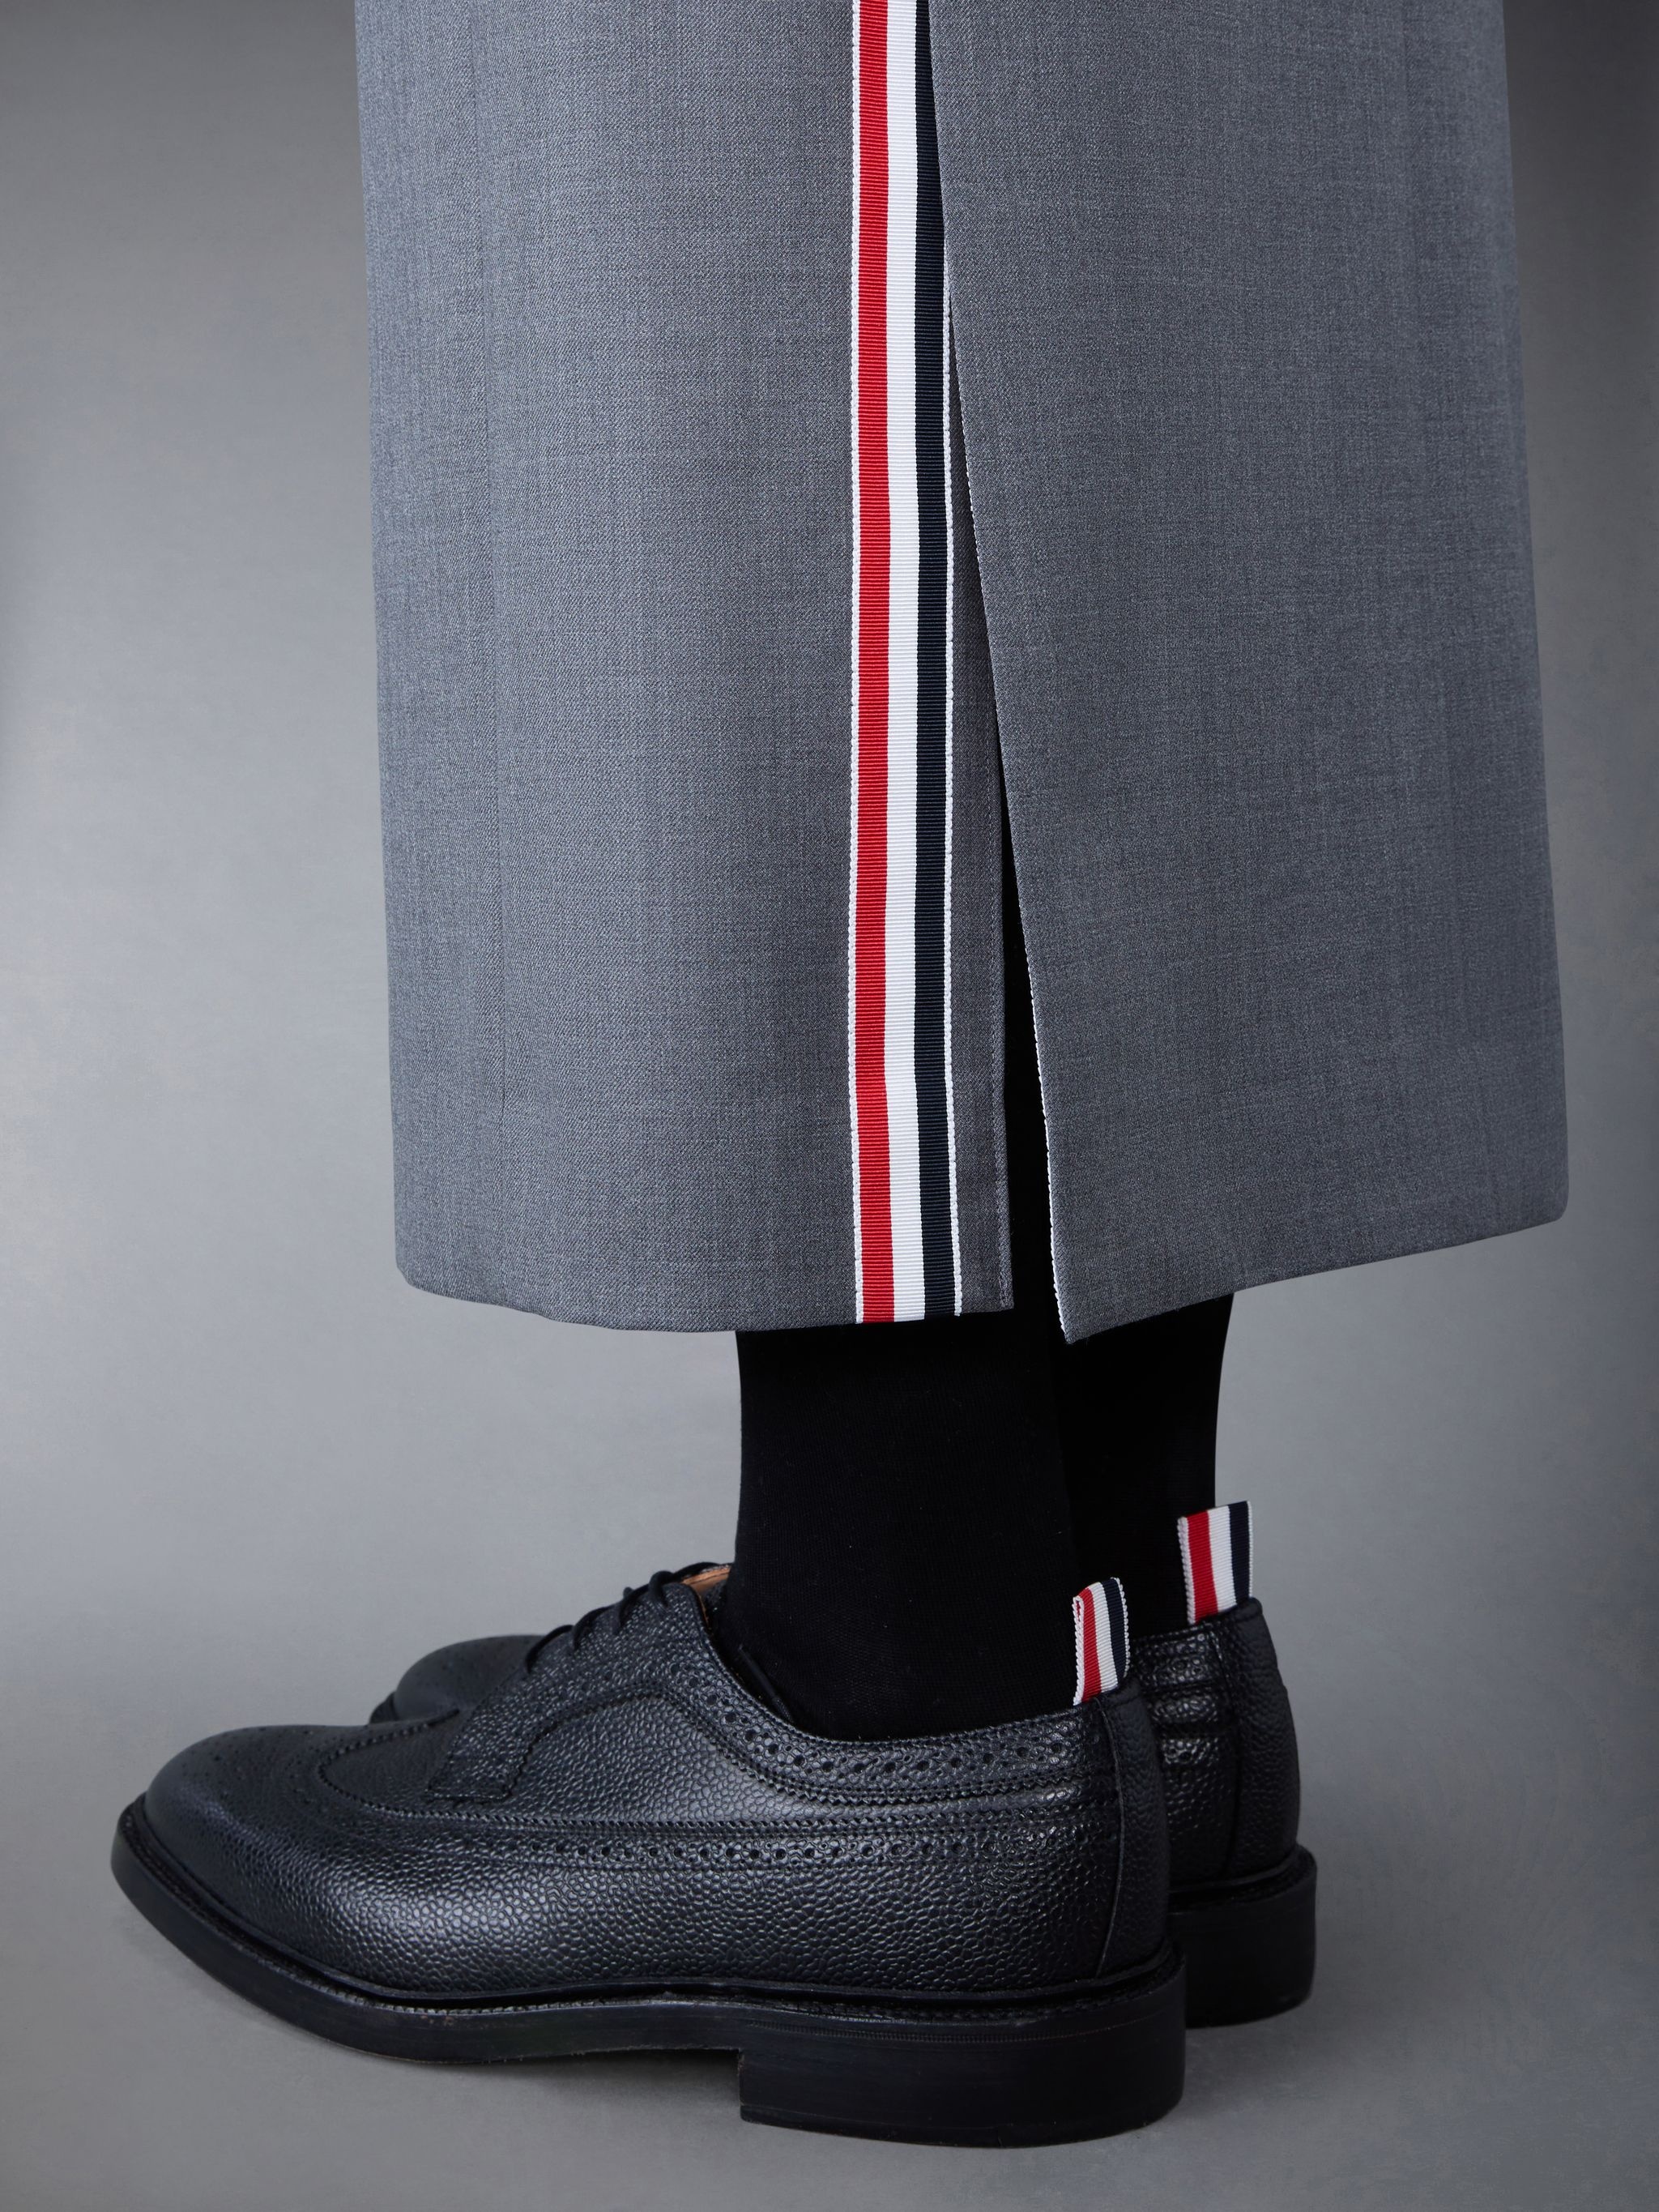 Medium Grey Wool Pique Suiting Single Pleat Trouser